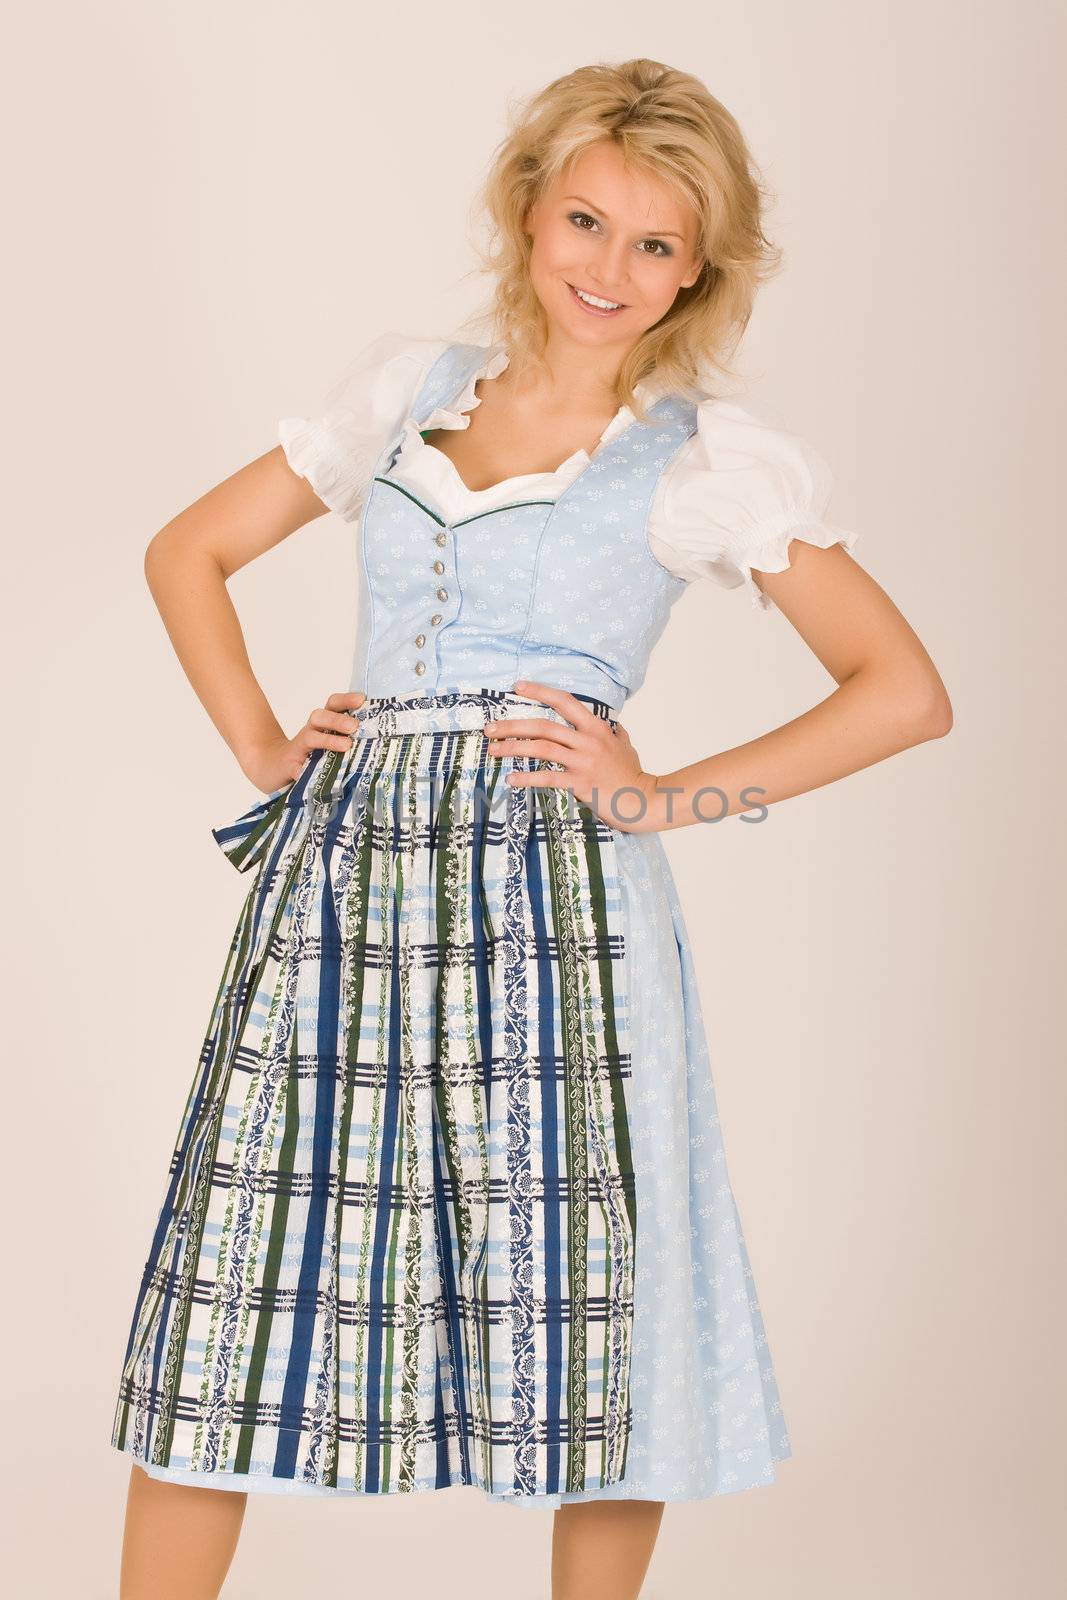 Bavarian girl in a dirndl